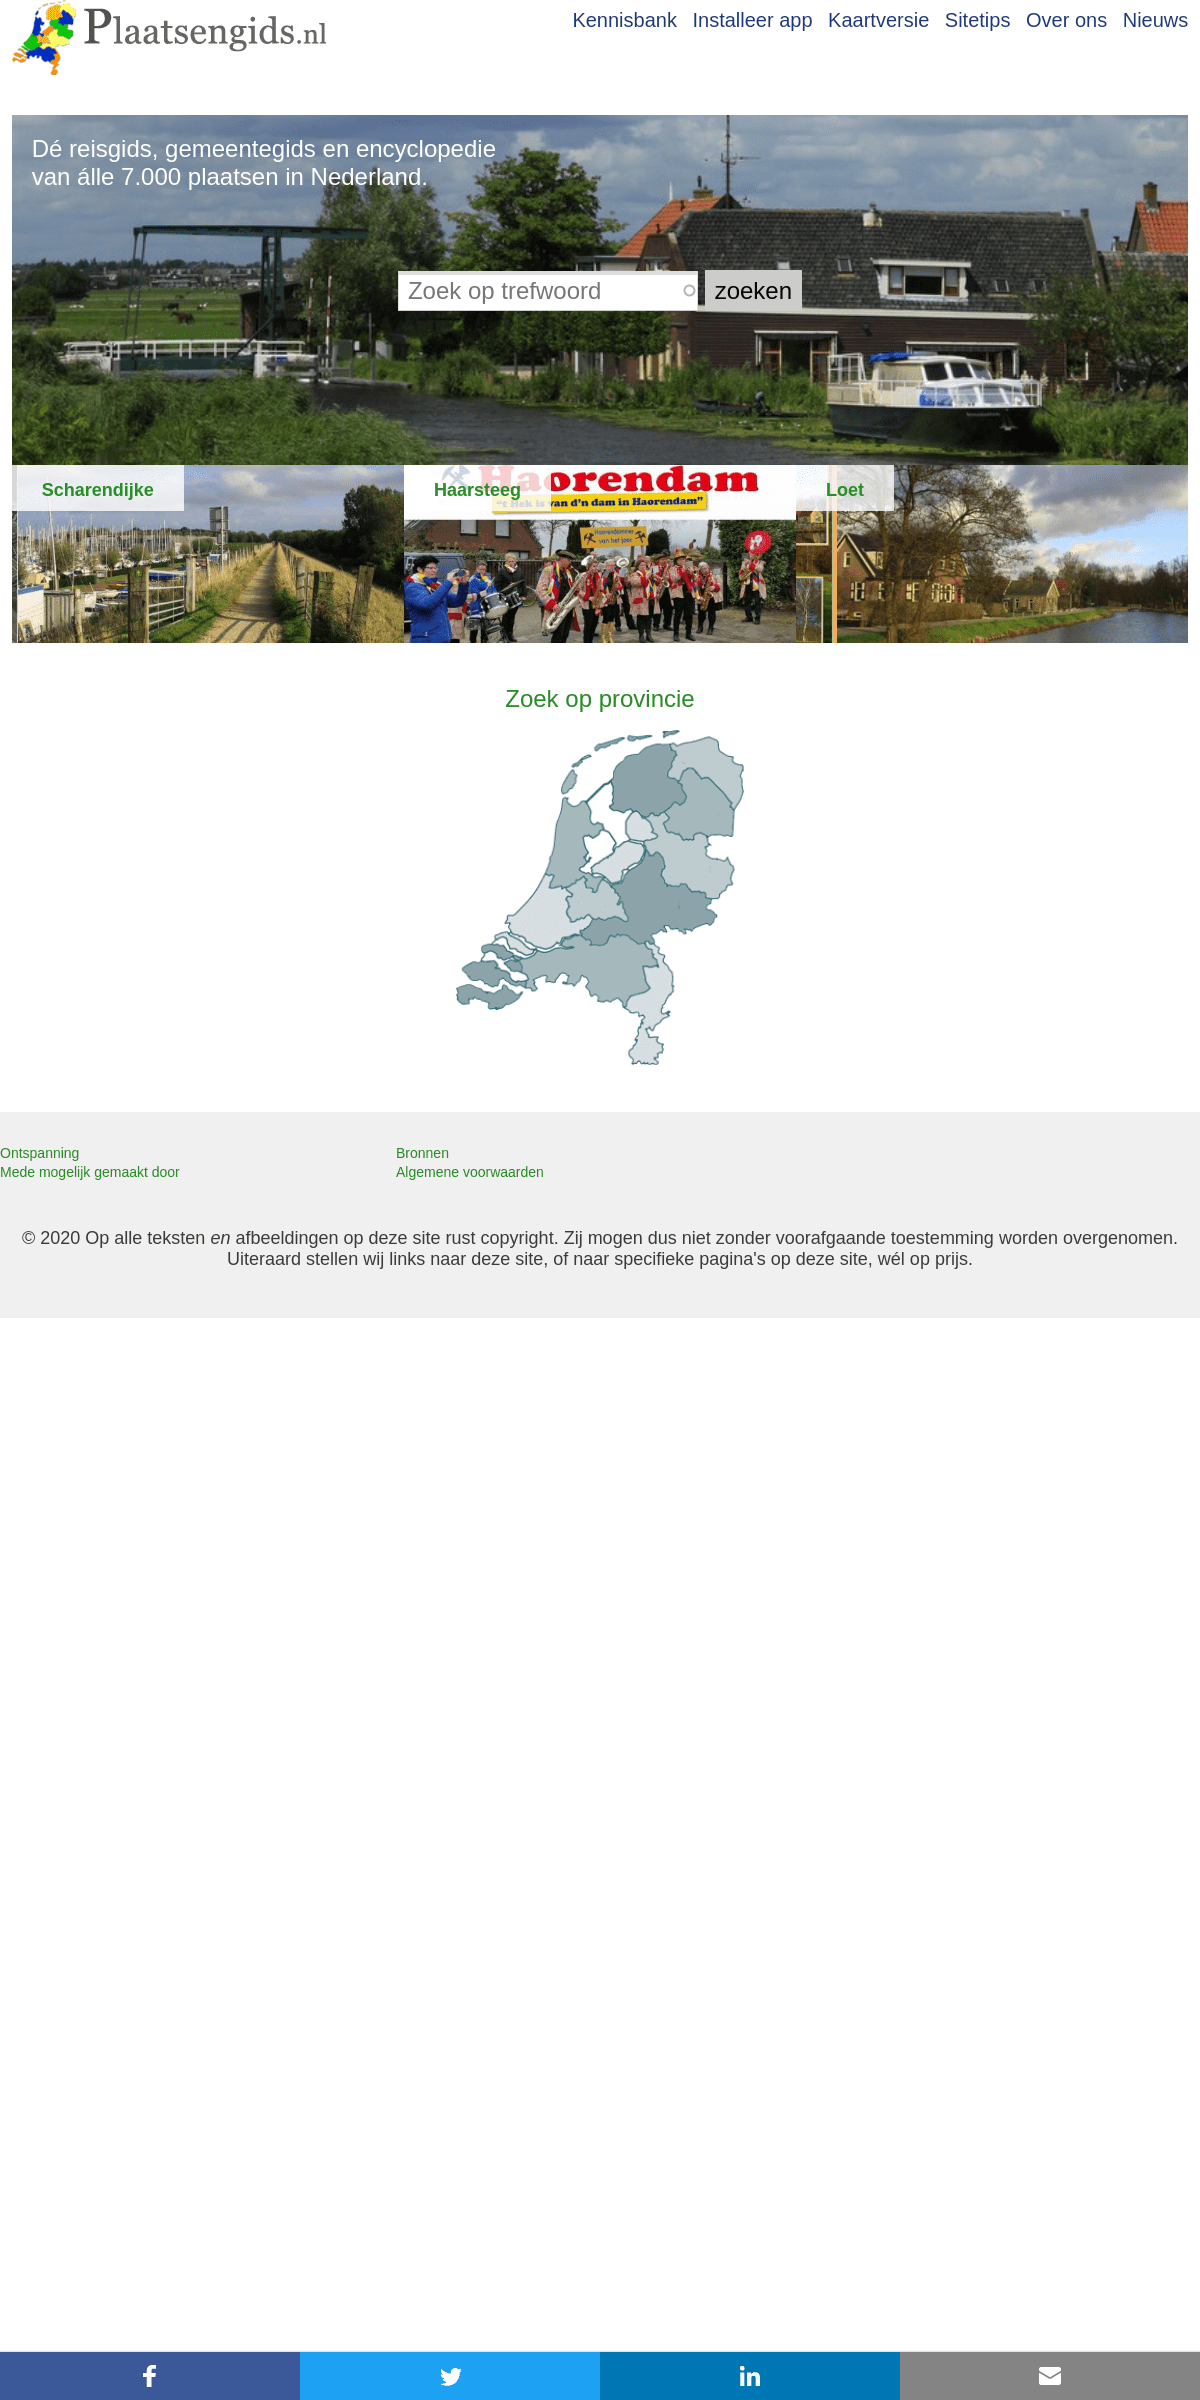 A complete backup of plaatsengids.nl